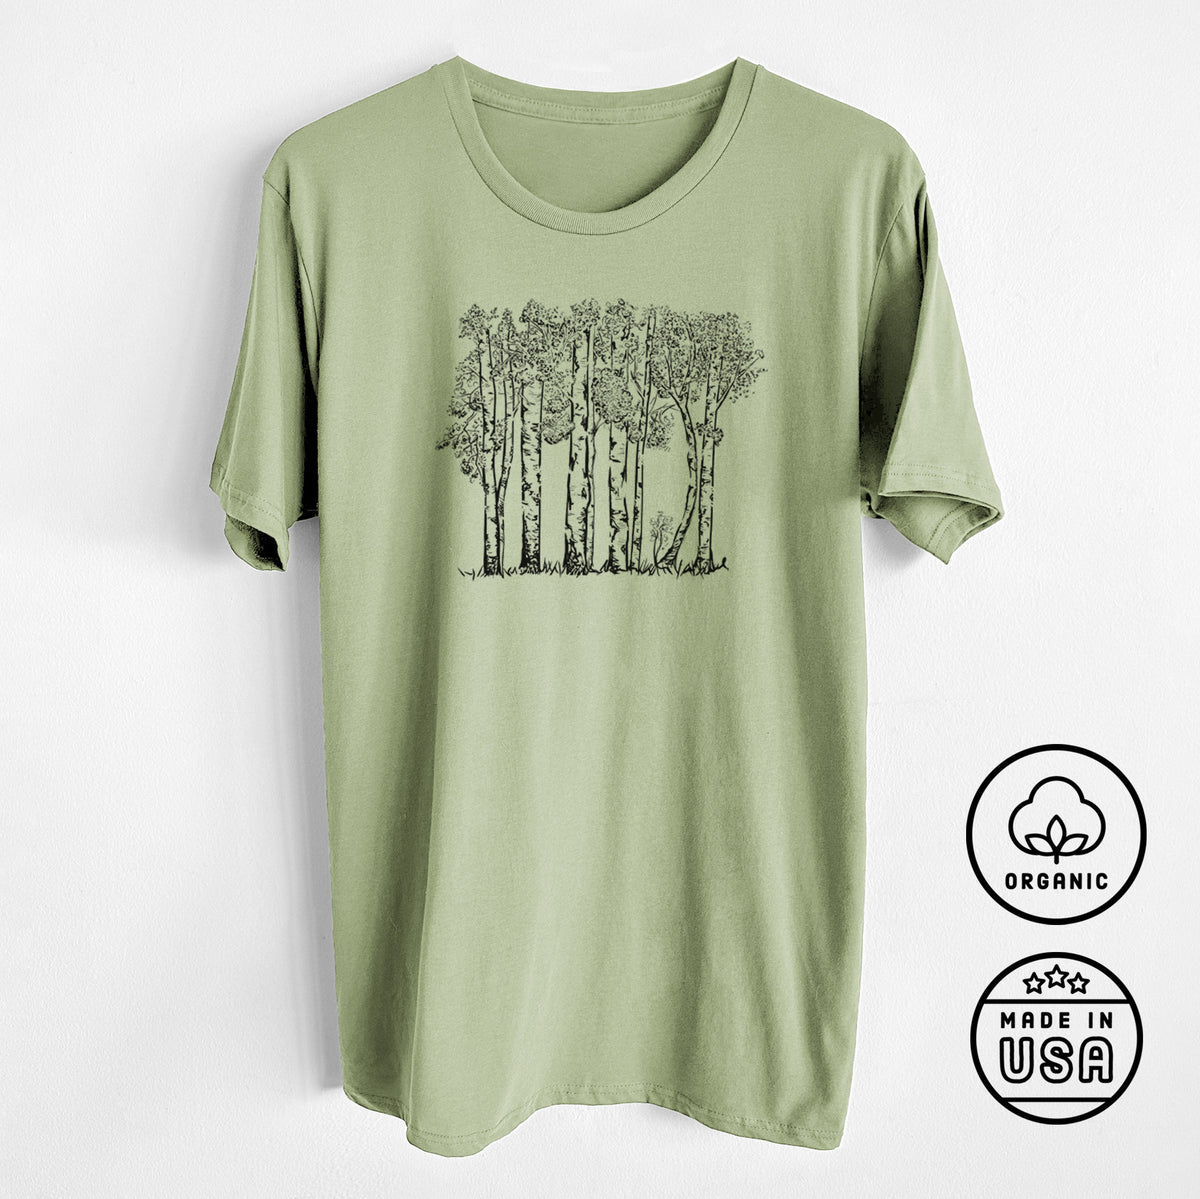 Quaking Aspens - Populus tremuloides - Unisex Crewneck - Made in USA - 100% Organic Cotton